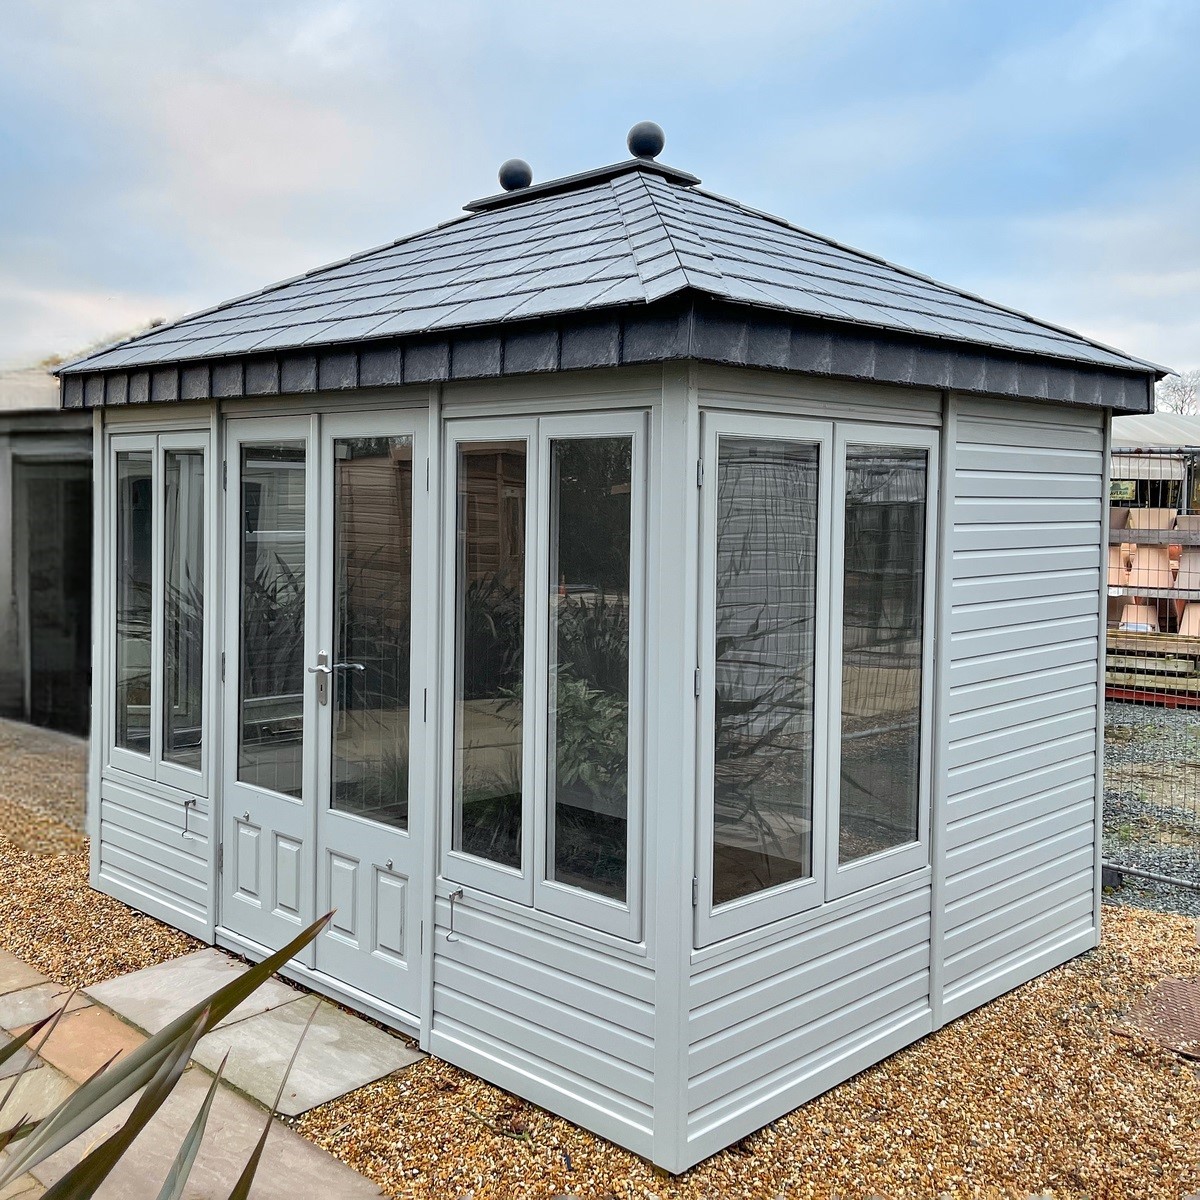 Malvern Ashton Summerhouse Hipped Slate Roof Square Top Windows